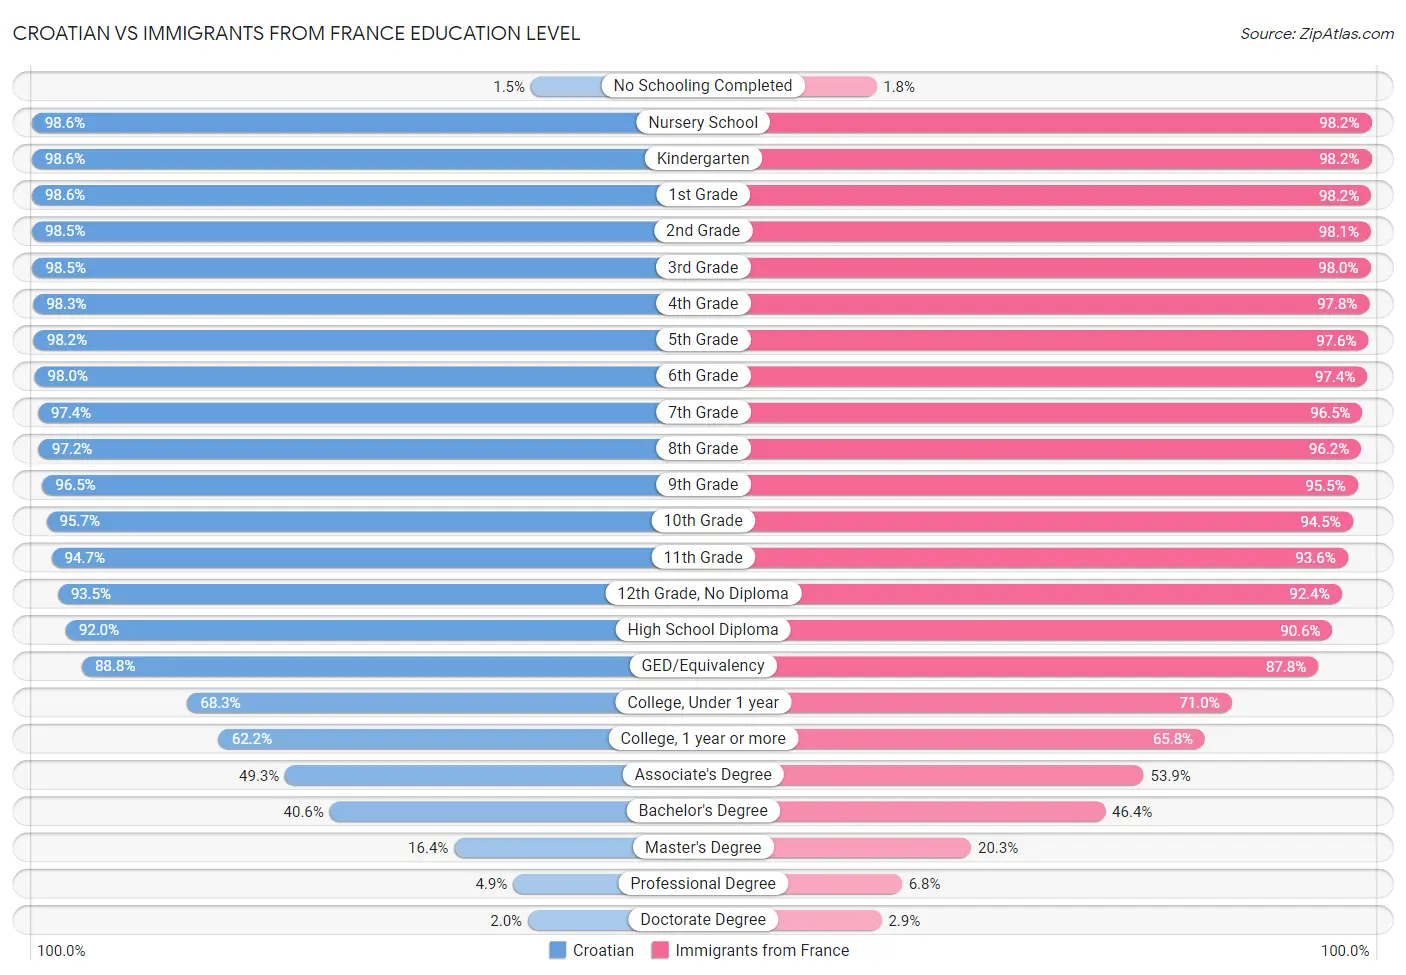 Croatian vs Immigrants from France Education Level